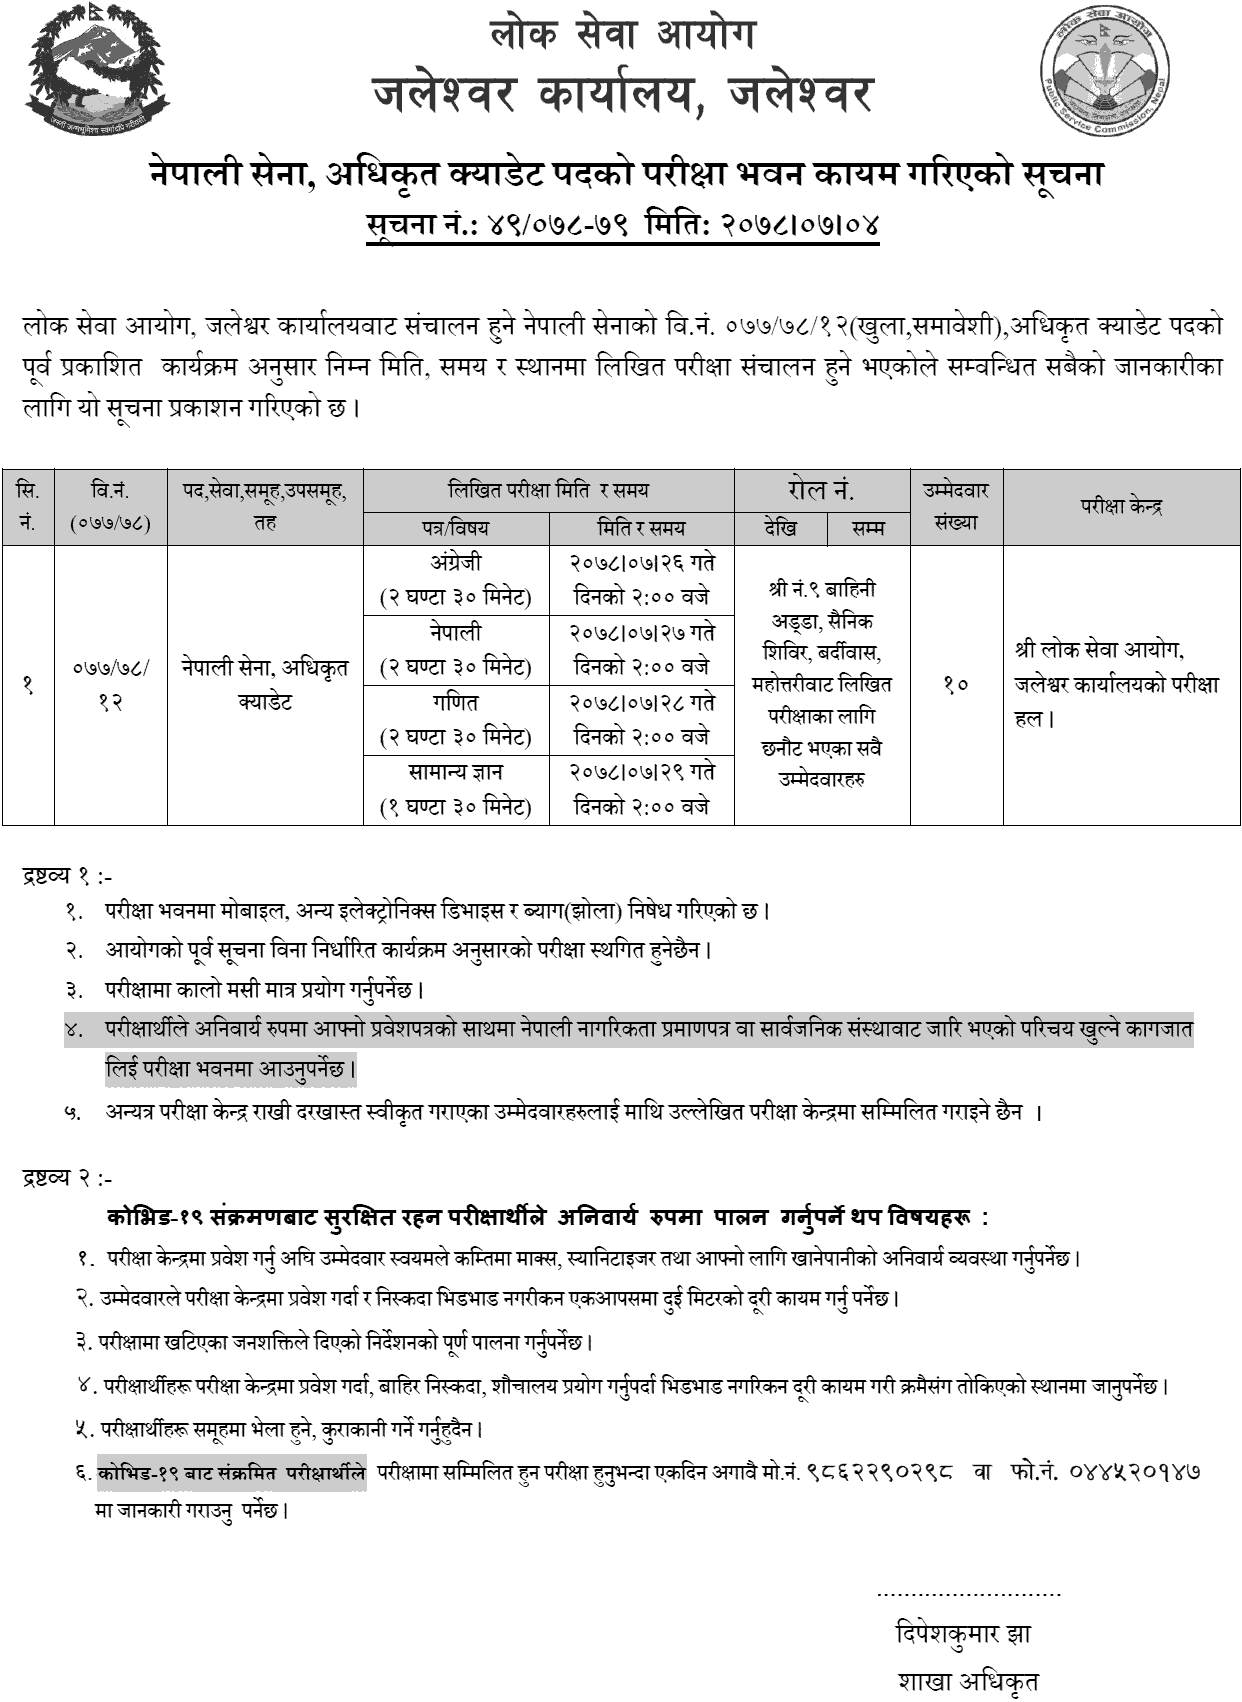 Nepal Army Officer Cadet Written Exam Center Jaleshwor